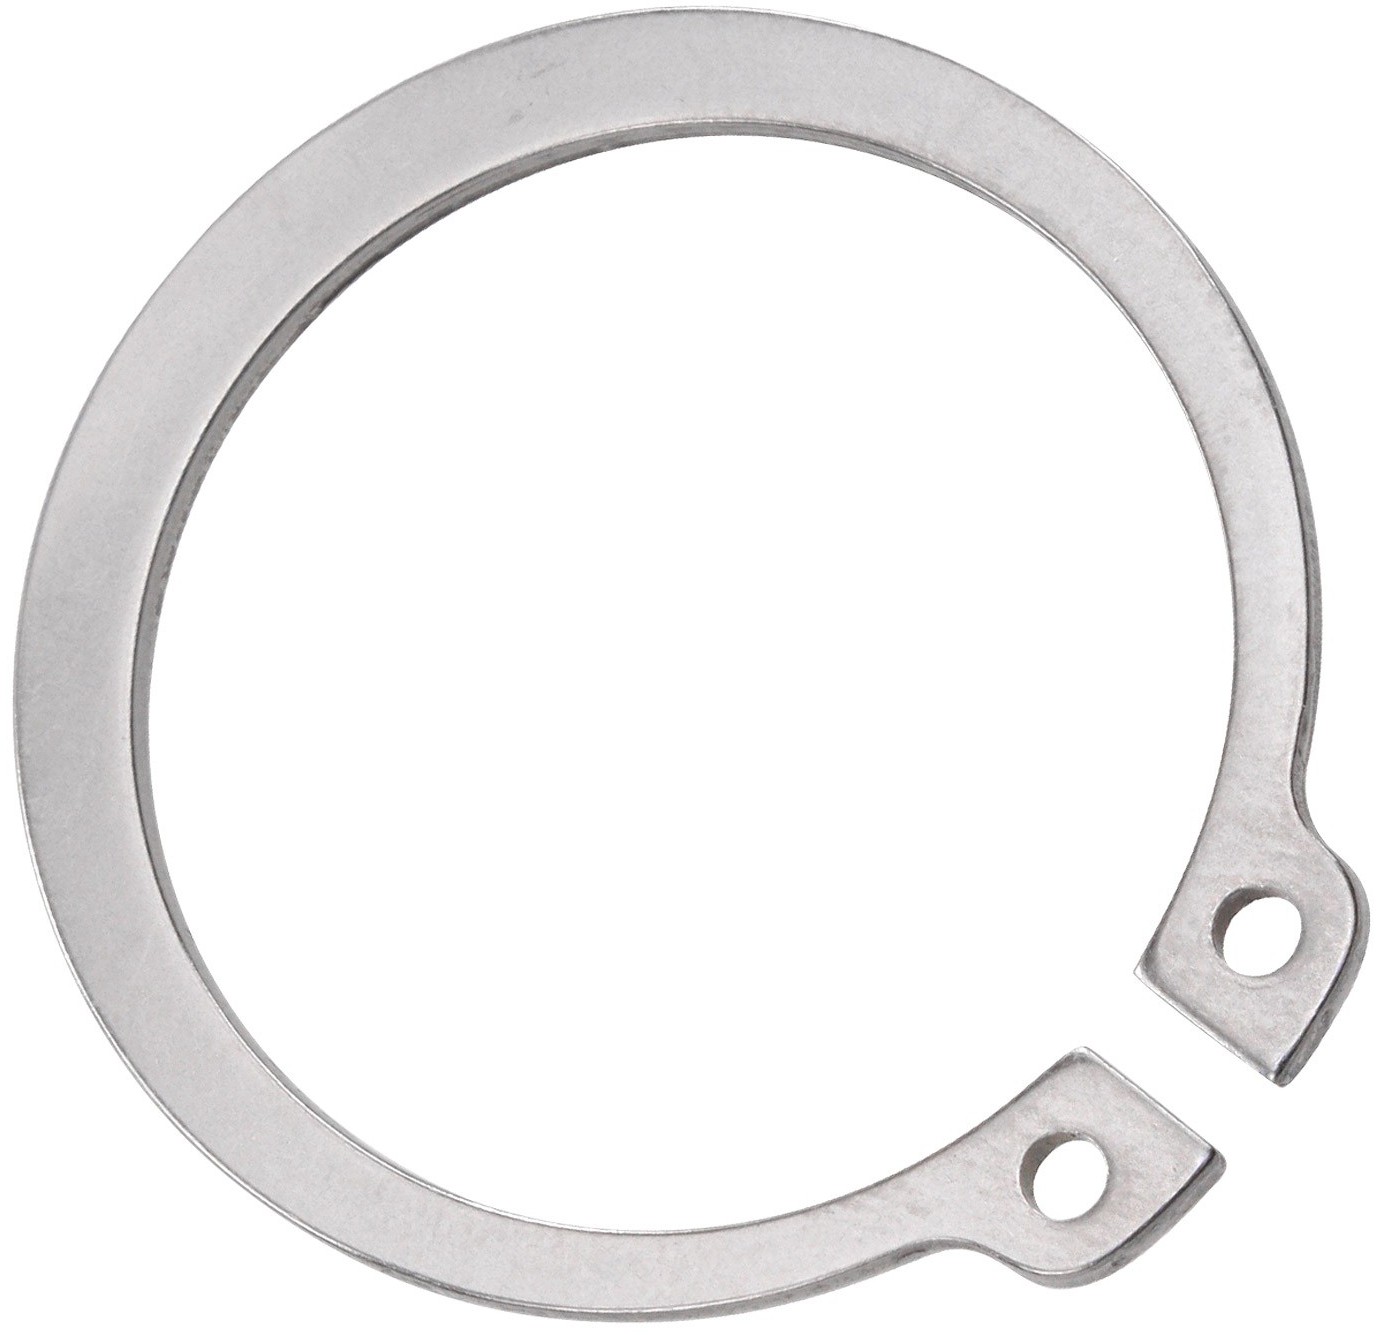 Кольцо стопорное наружное 110х4 DIN 471, нержавеющая сталь 1.4122 (А2) - фото